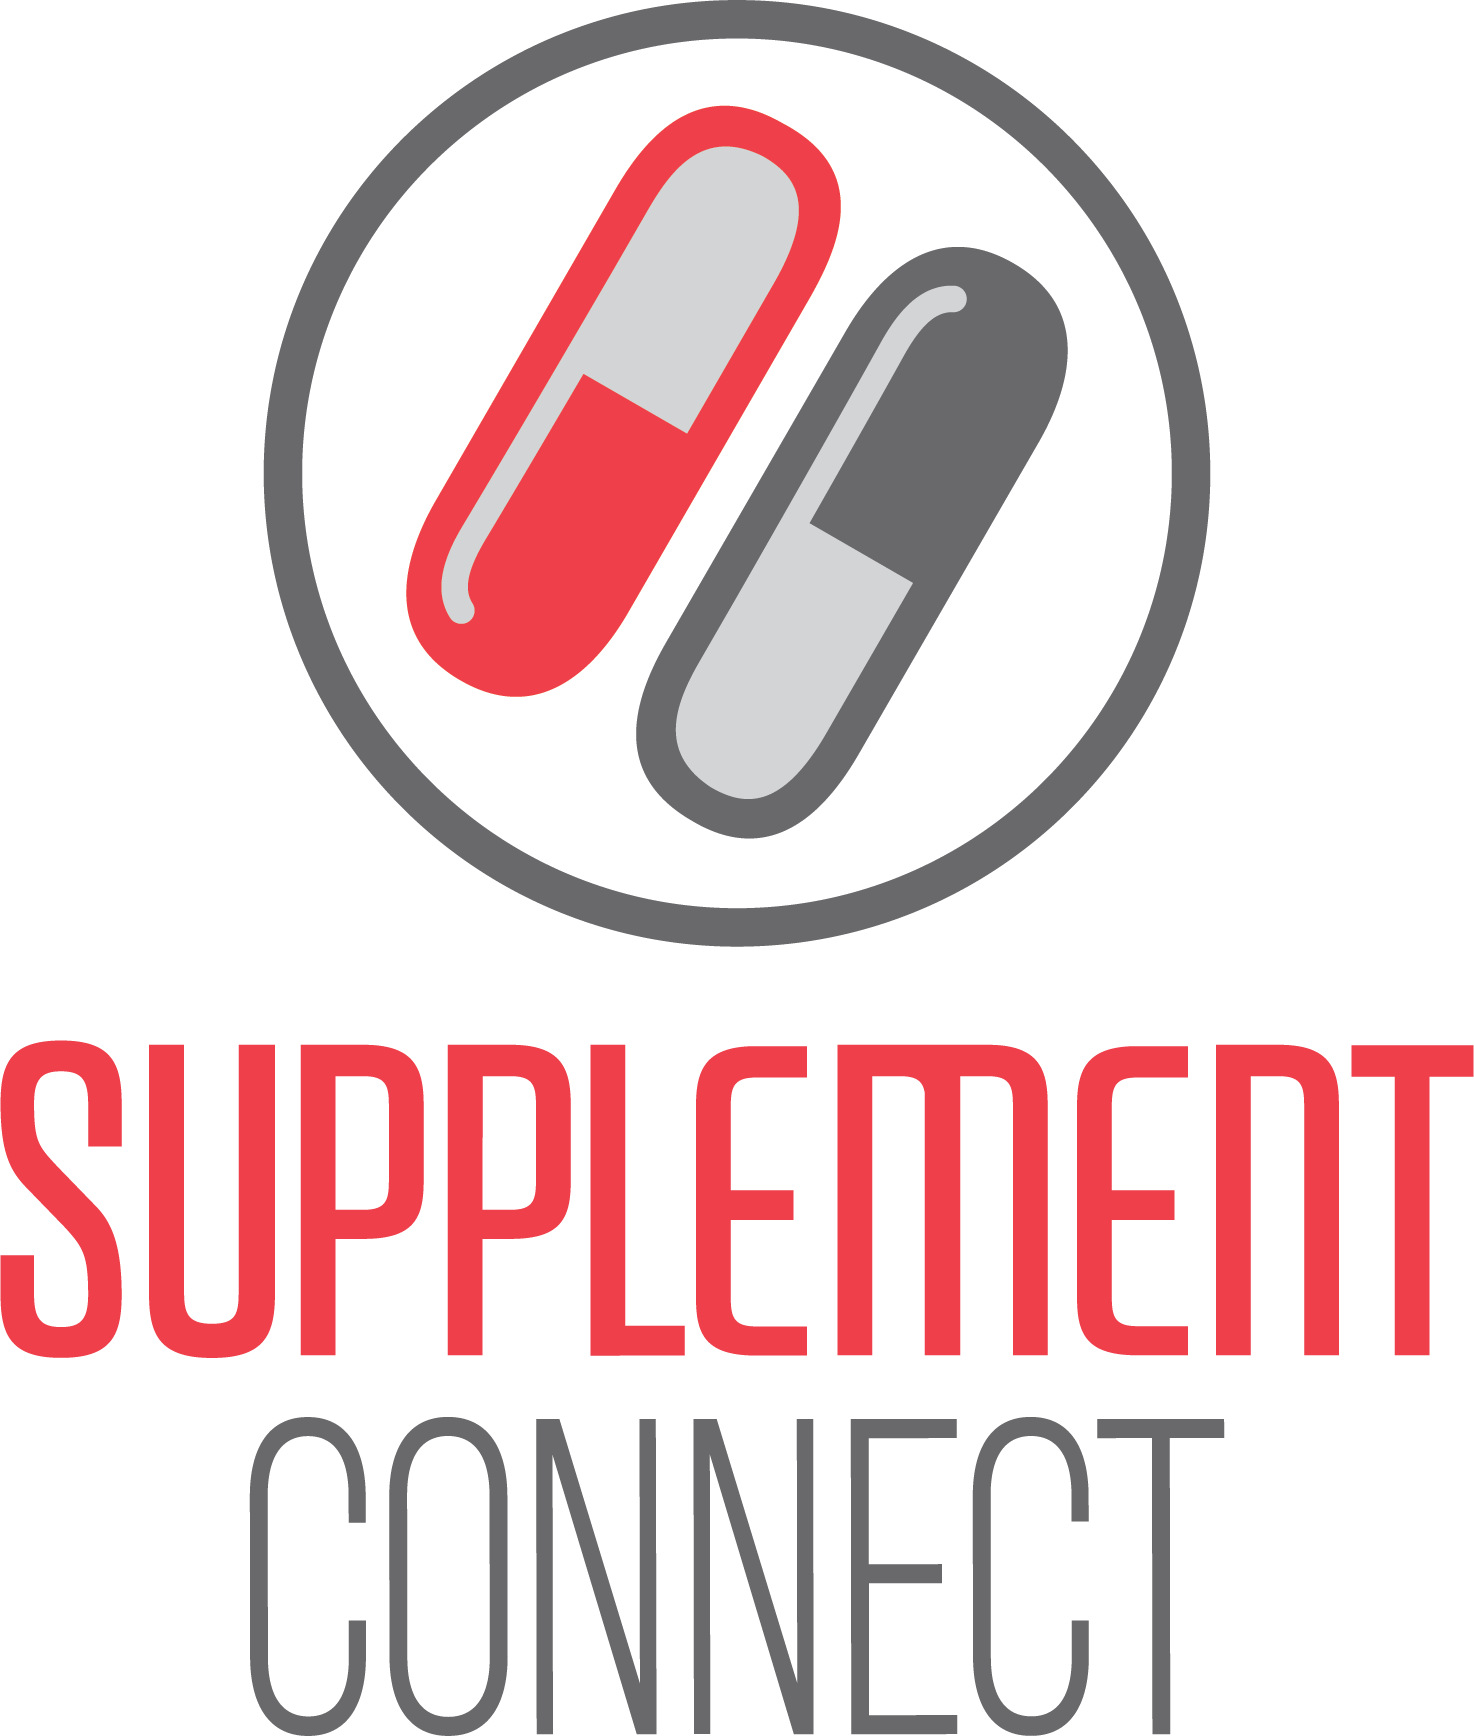 Supplement Connect logo.